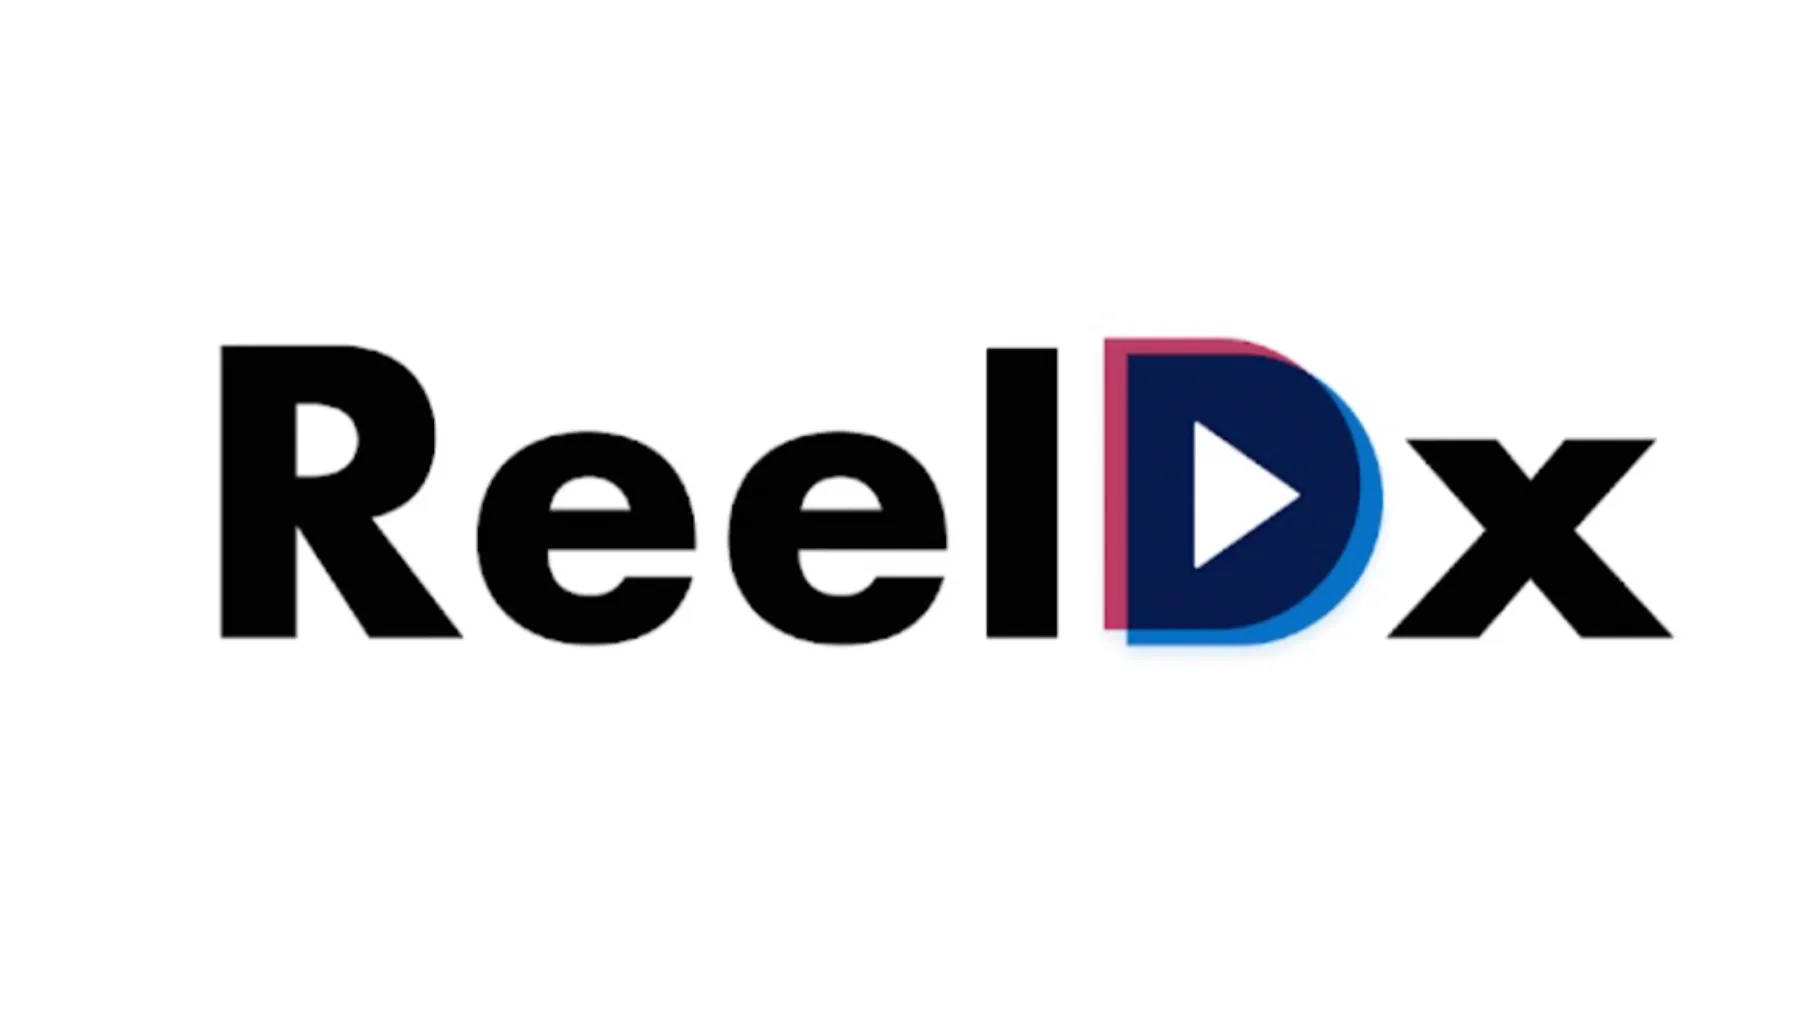 ReelDX